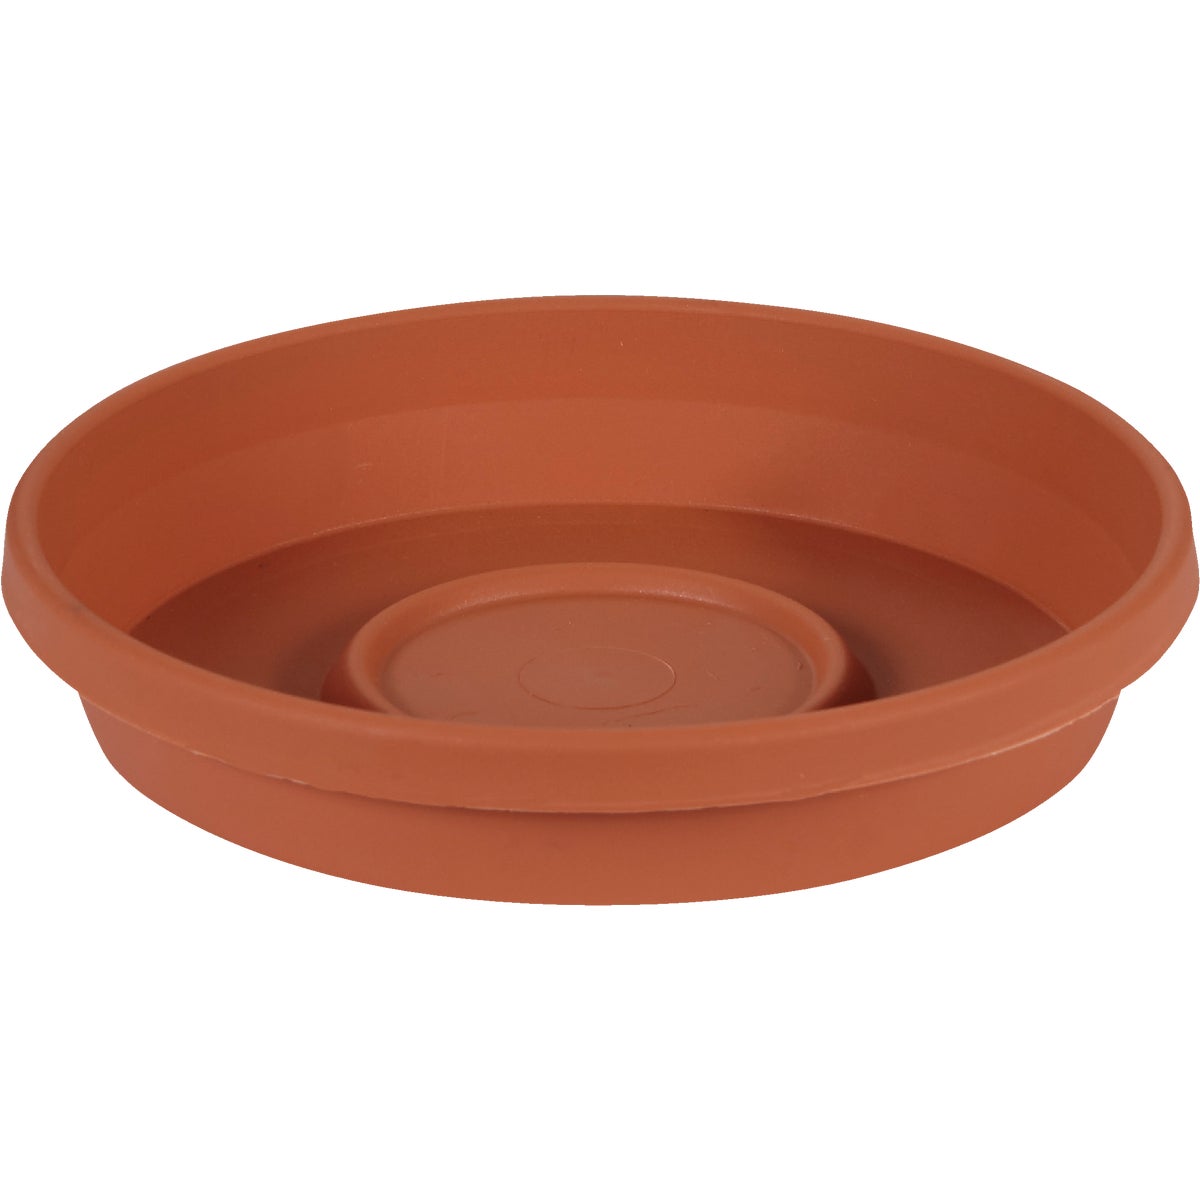 Item 717355, Deep classic saucer that complements poly flower pots.